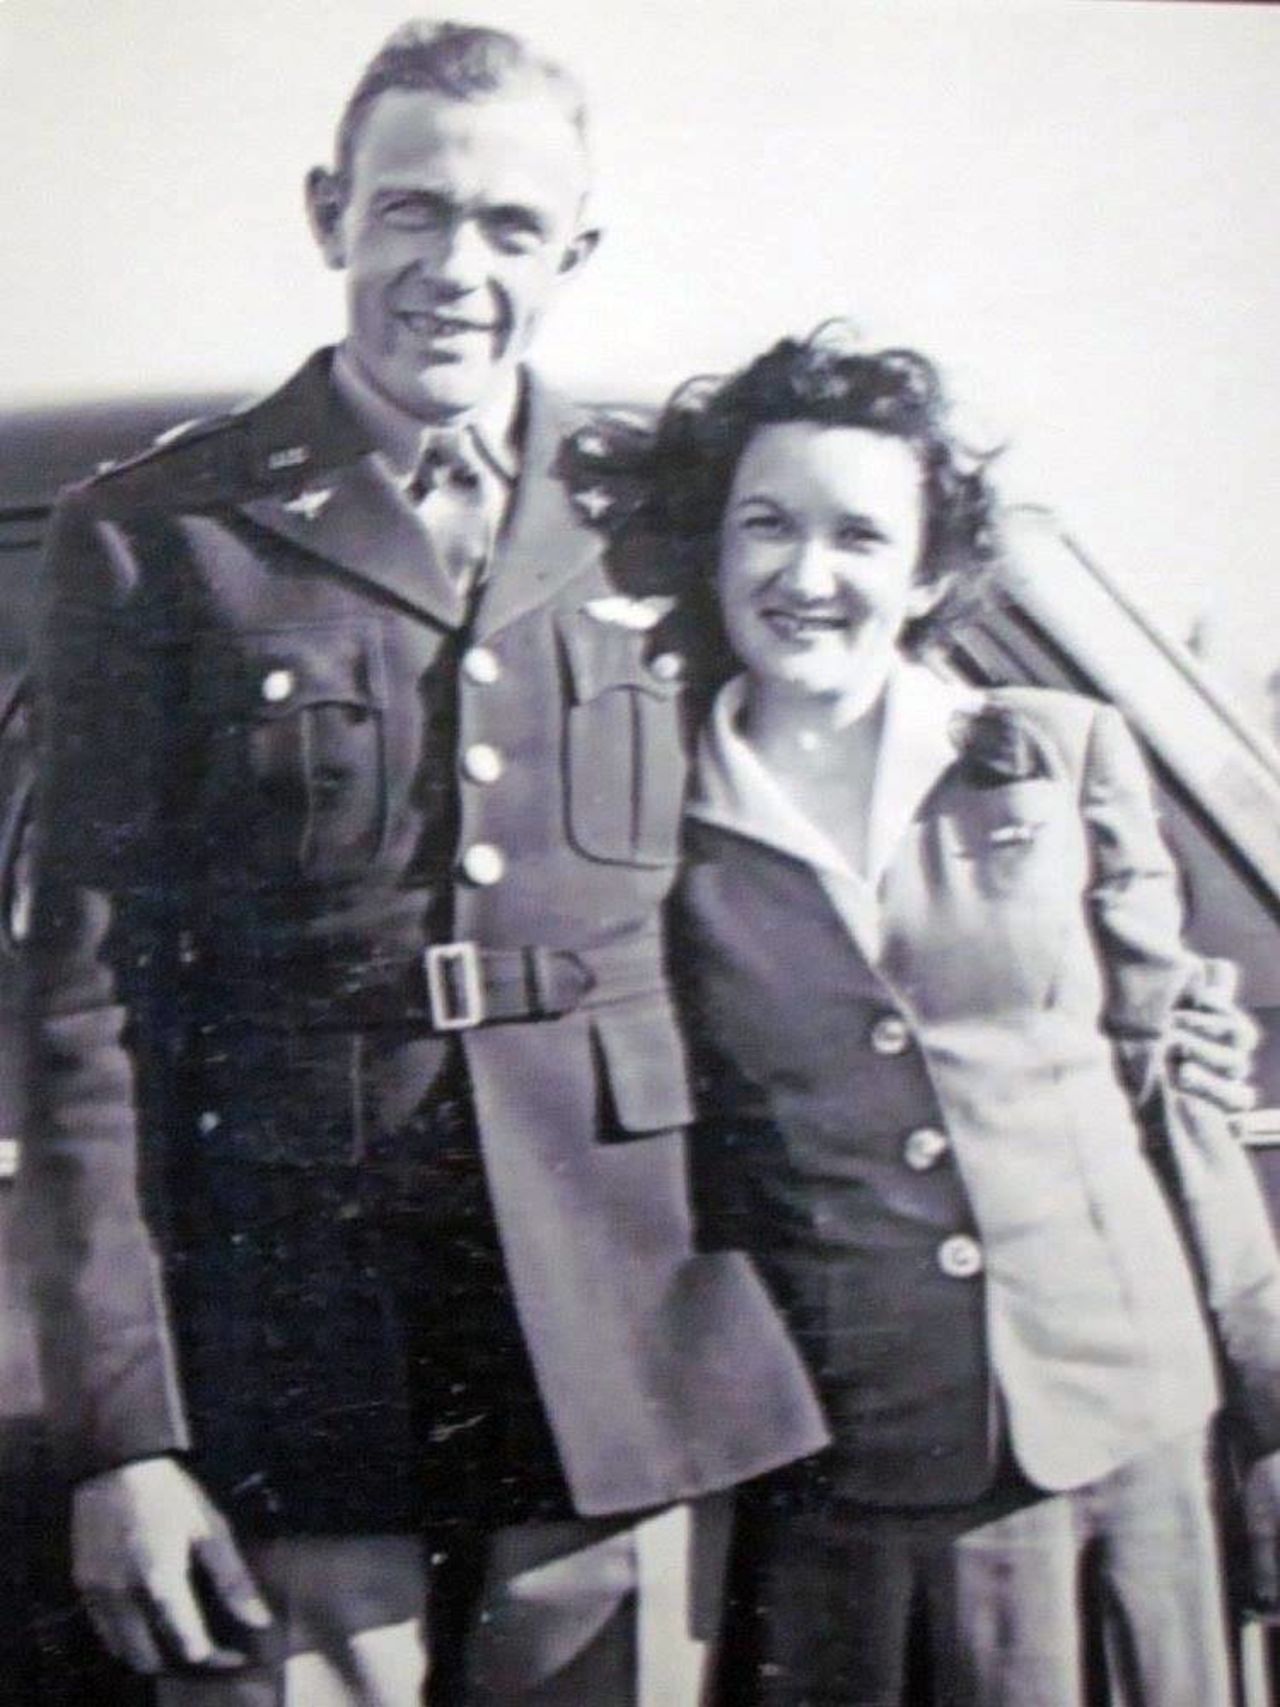 Richard Christenson con su novia Ruth.  (Cortesía de Marie Janiszewski)